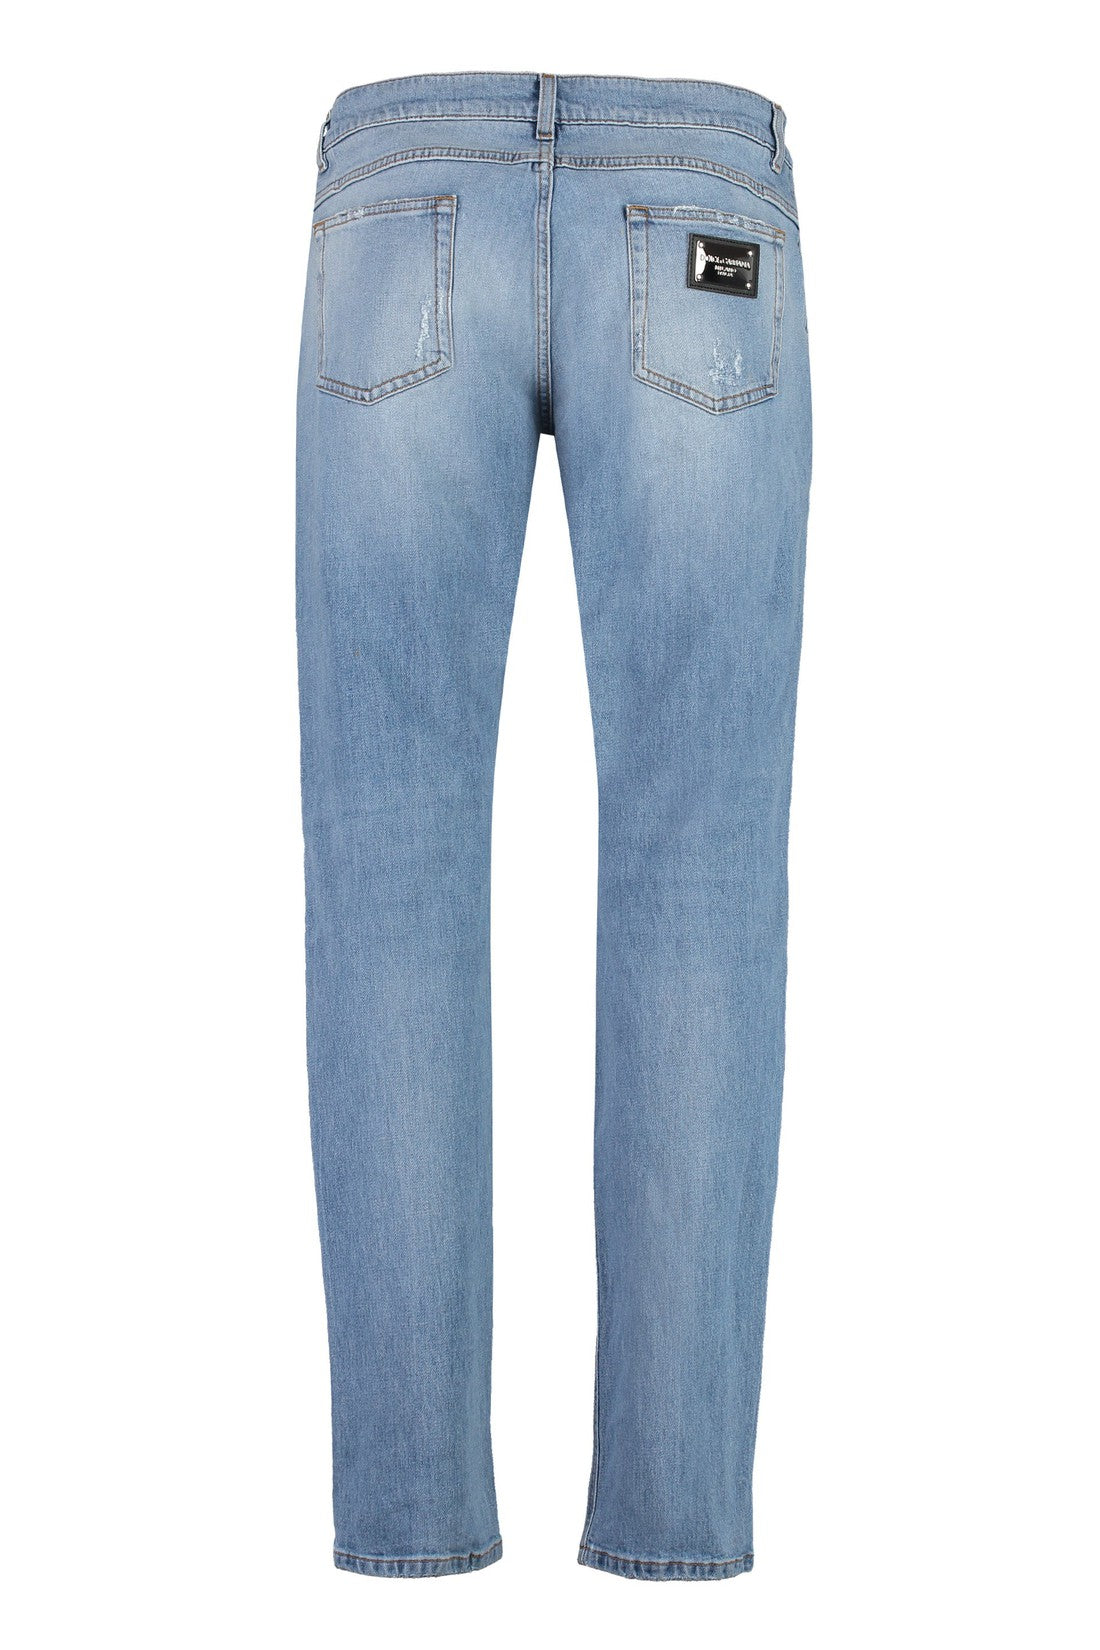 Dolce & Gabbana-OUTLET-SALE-5-pocket straight-leg jeans-ARCHIVIST